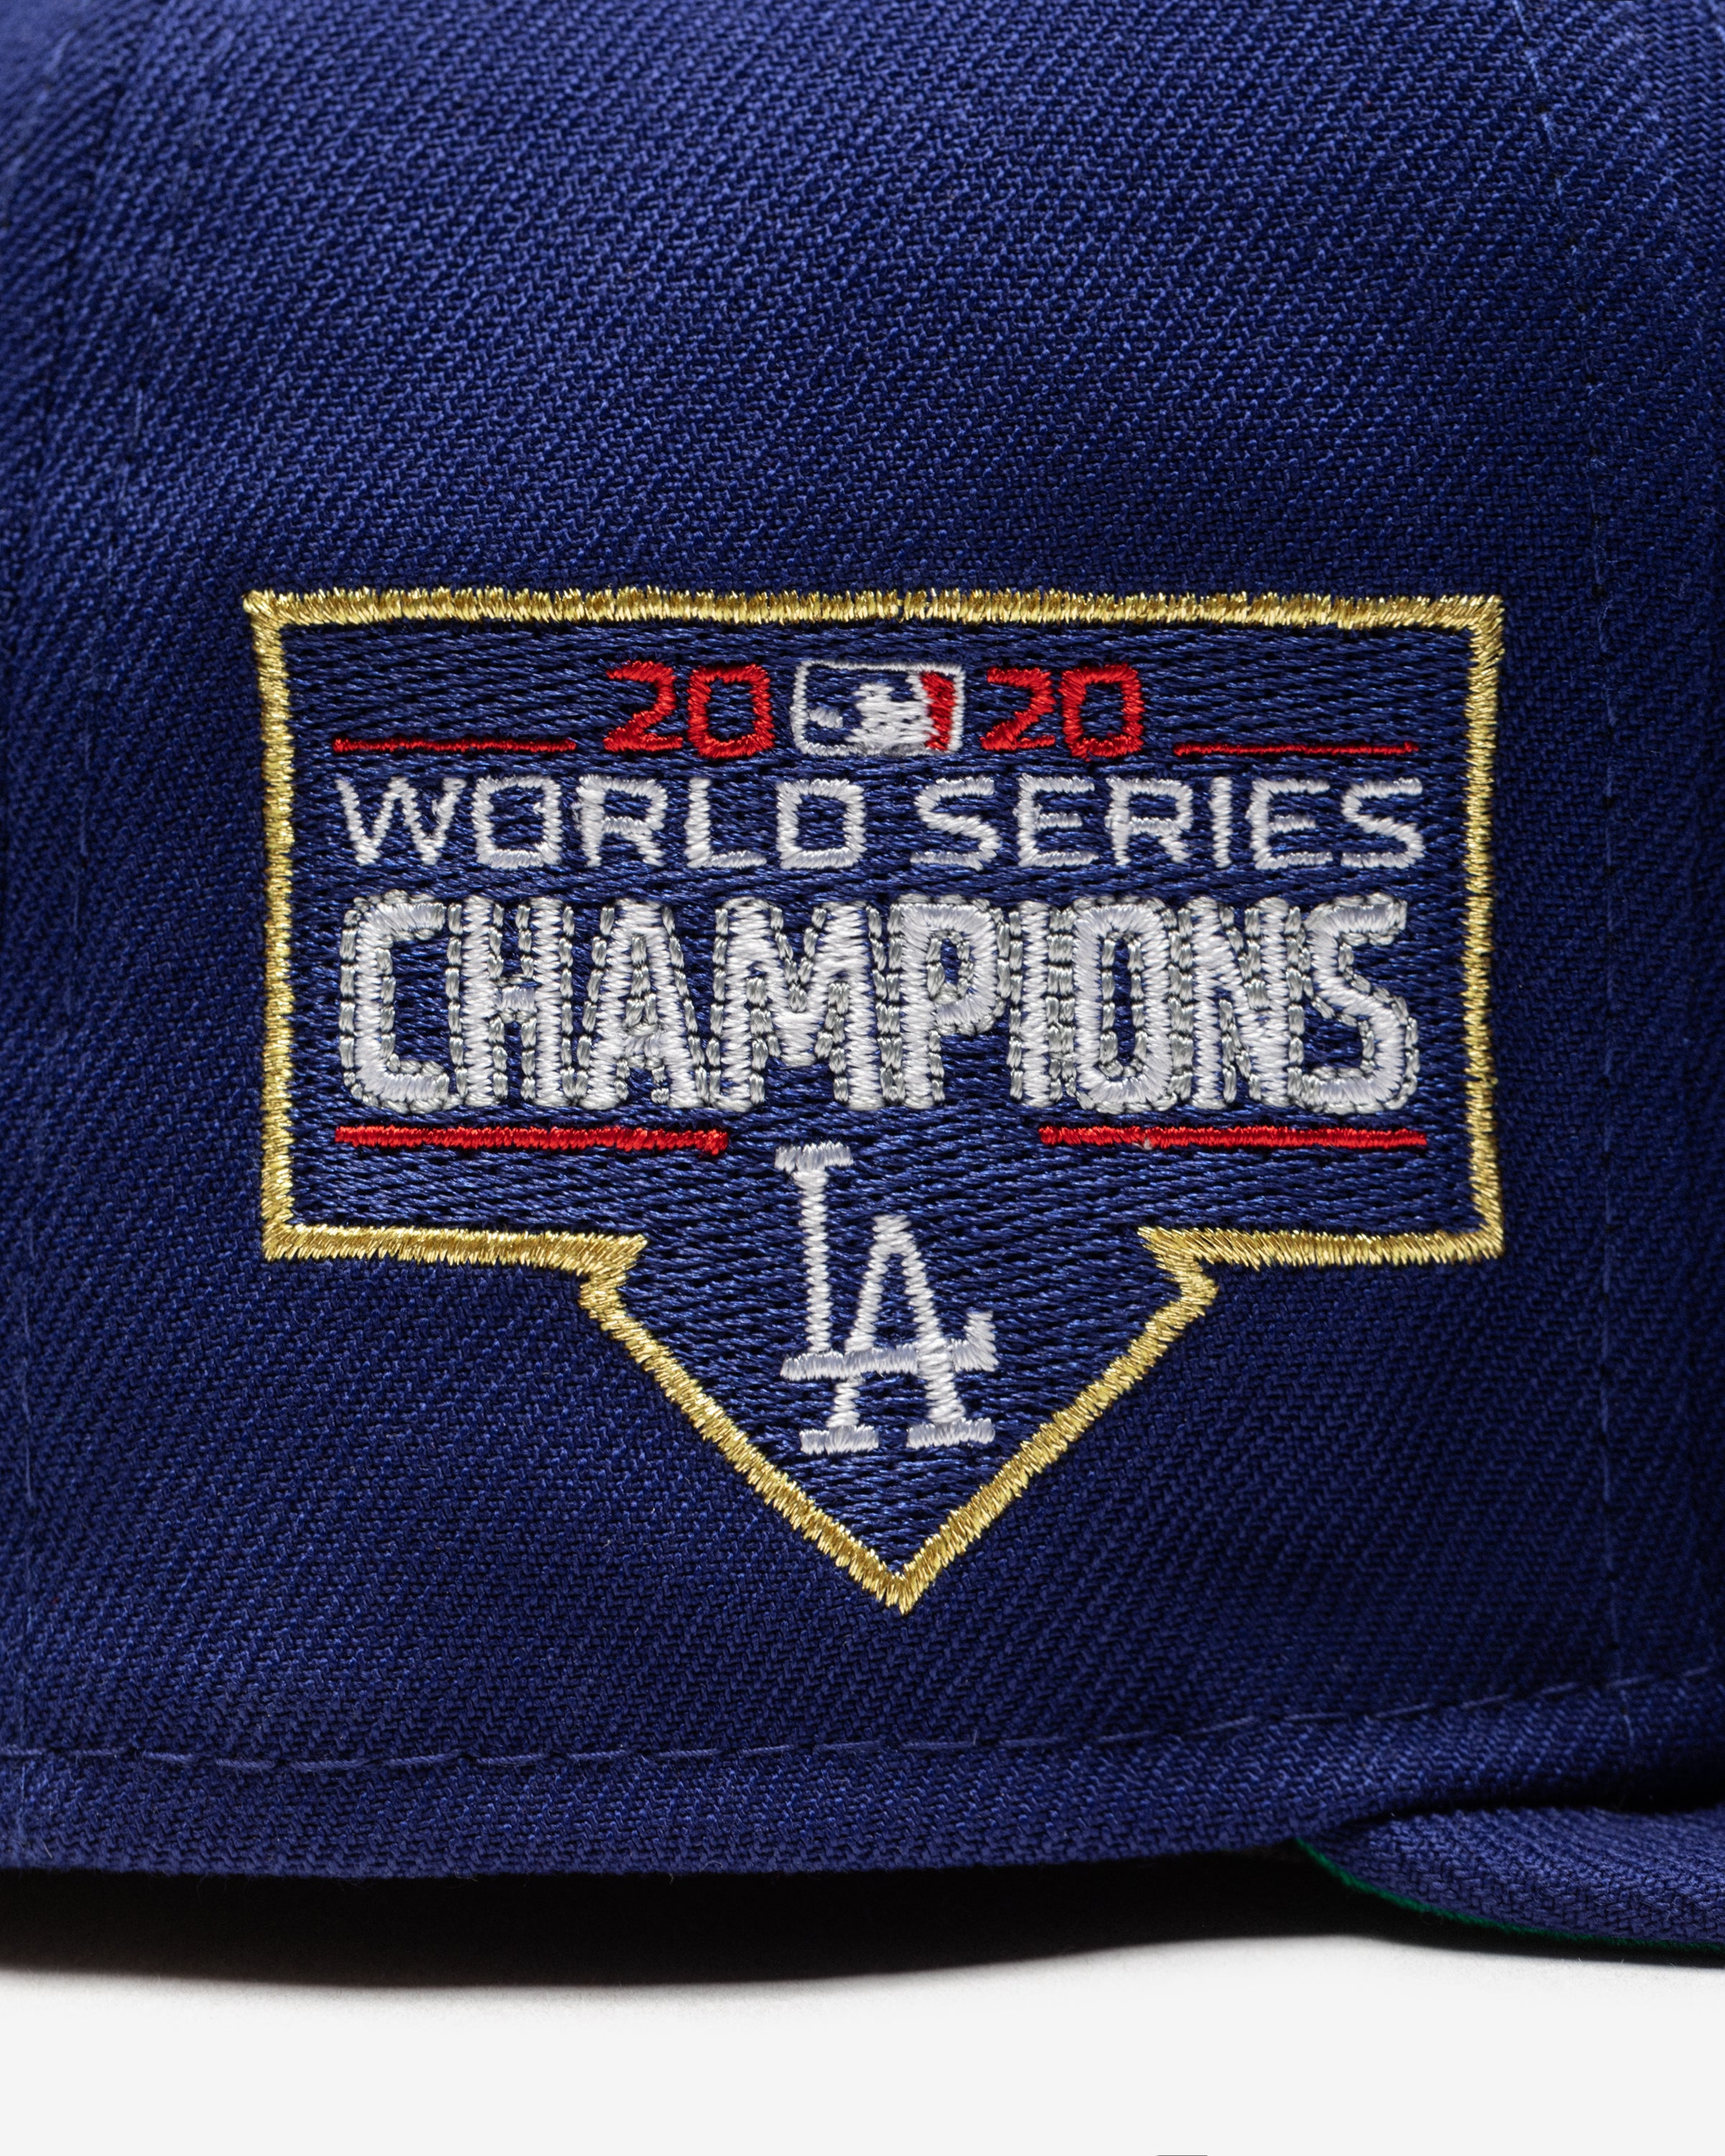 MLB WORLD SERIES CHAMPIONS Los Angeles DODGERS Poncho